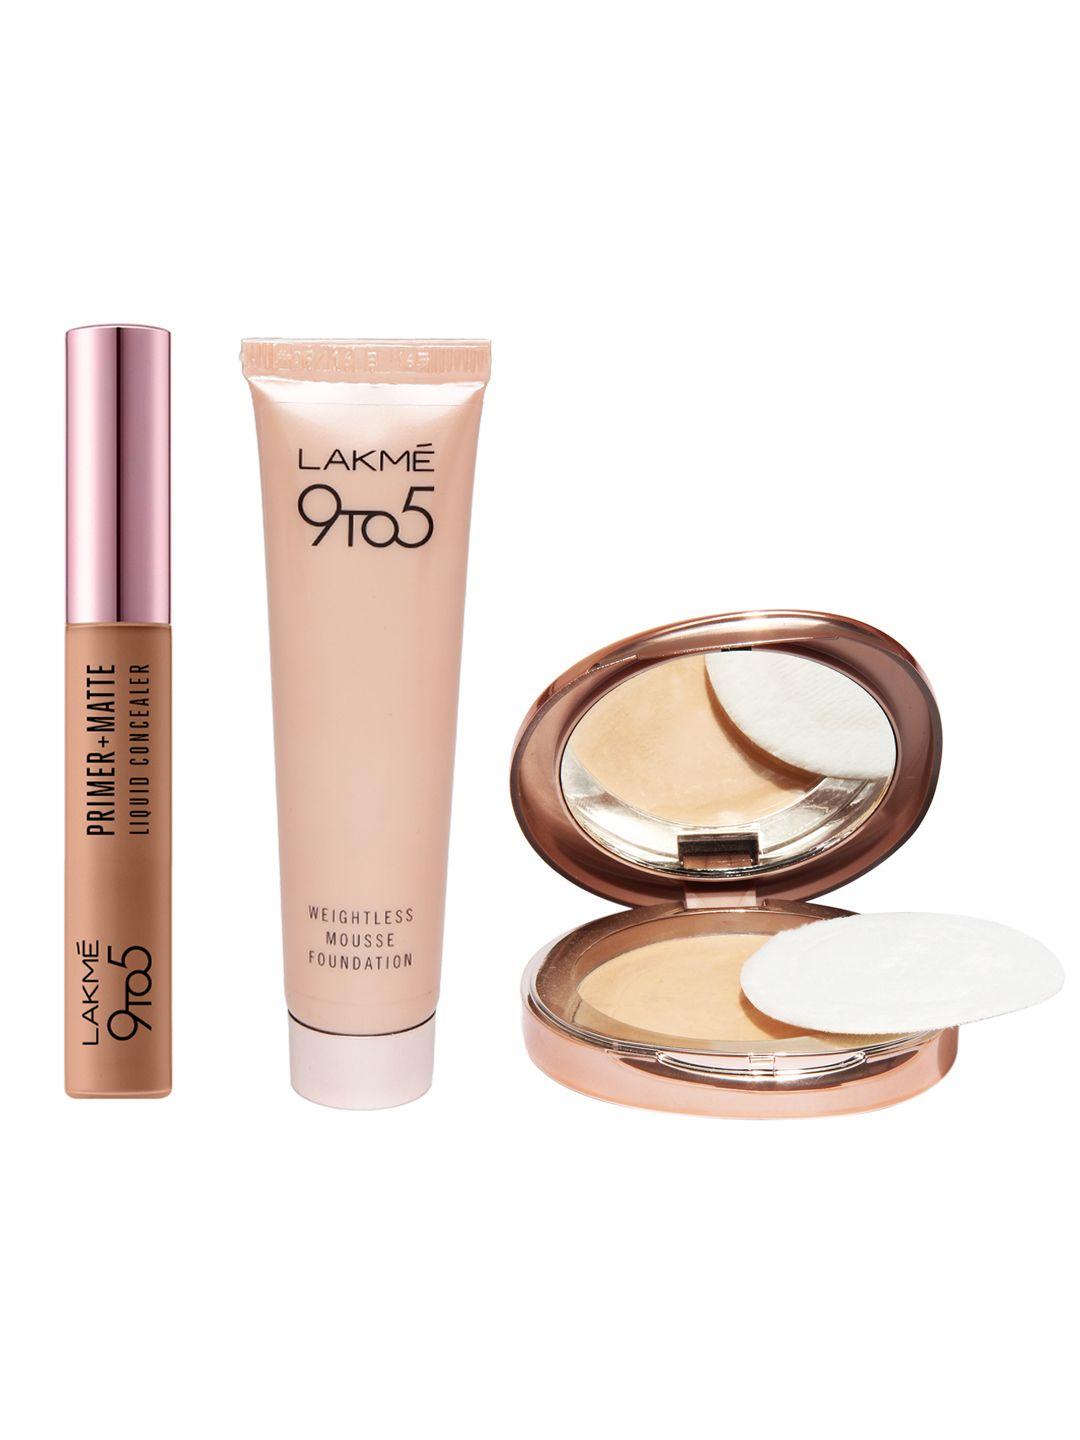 lakme 9to5 makeup set - concealer + mousse foundation + compact